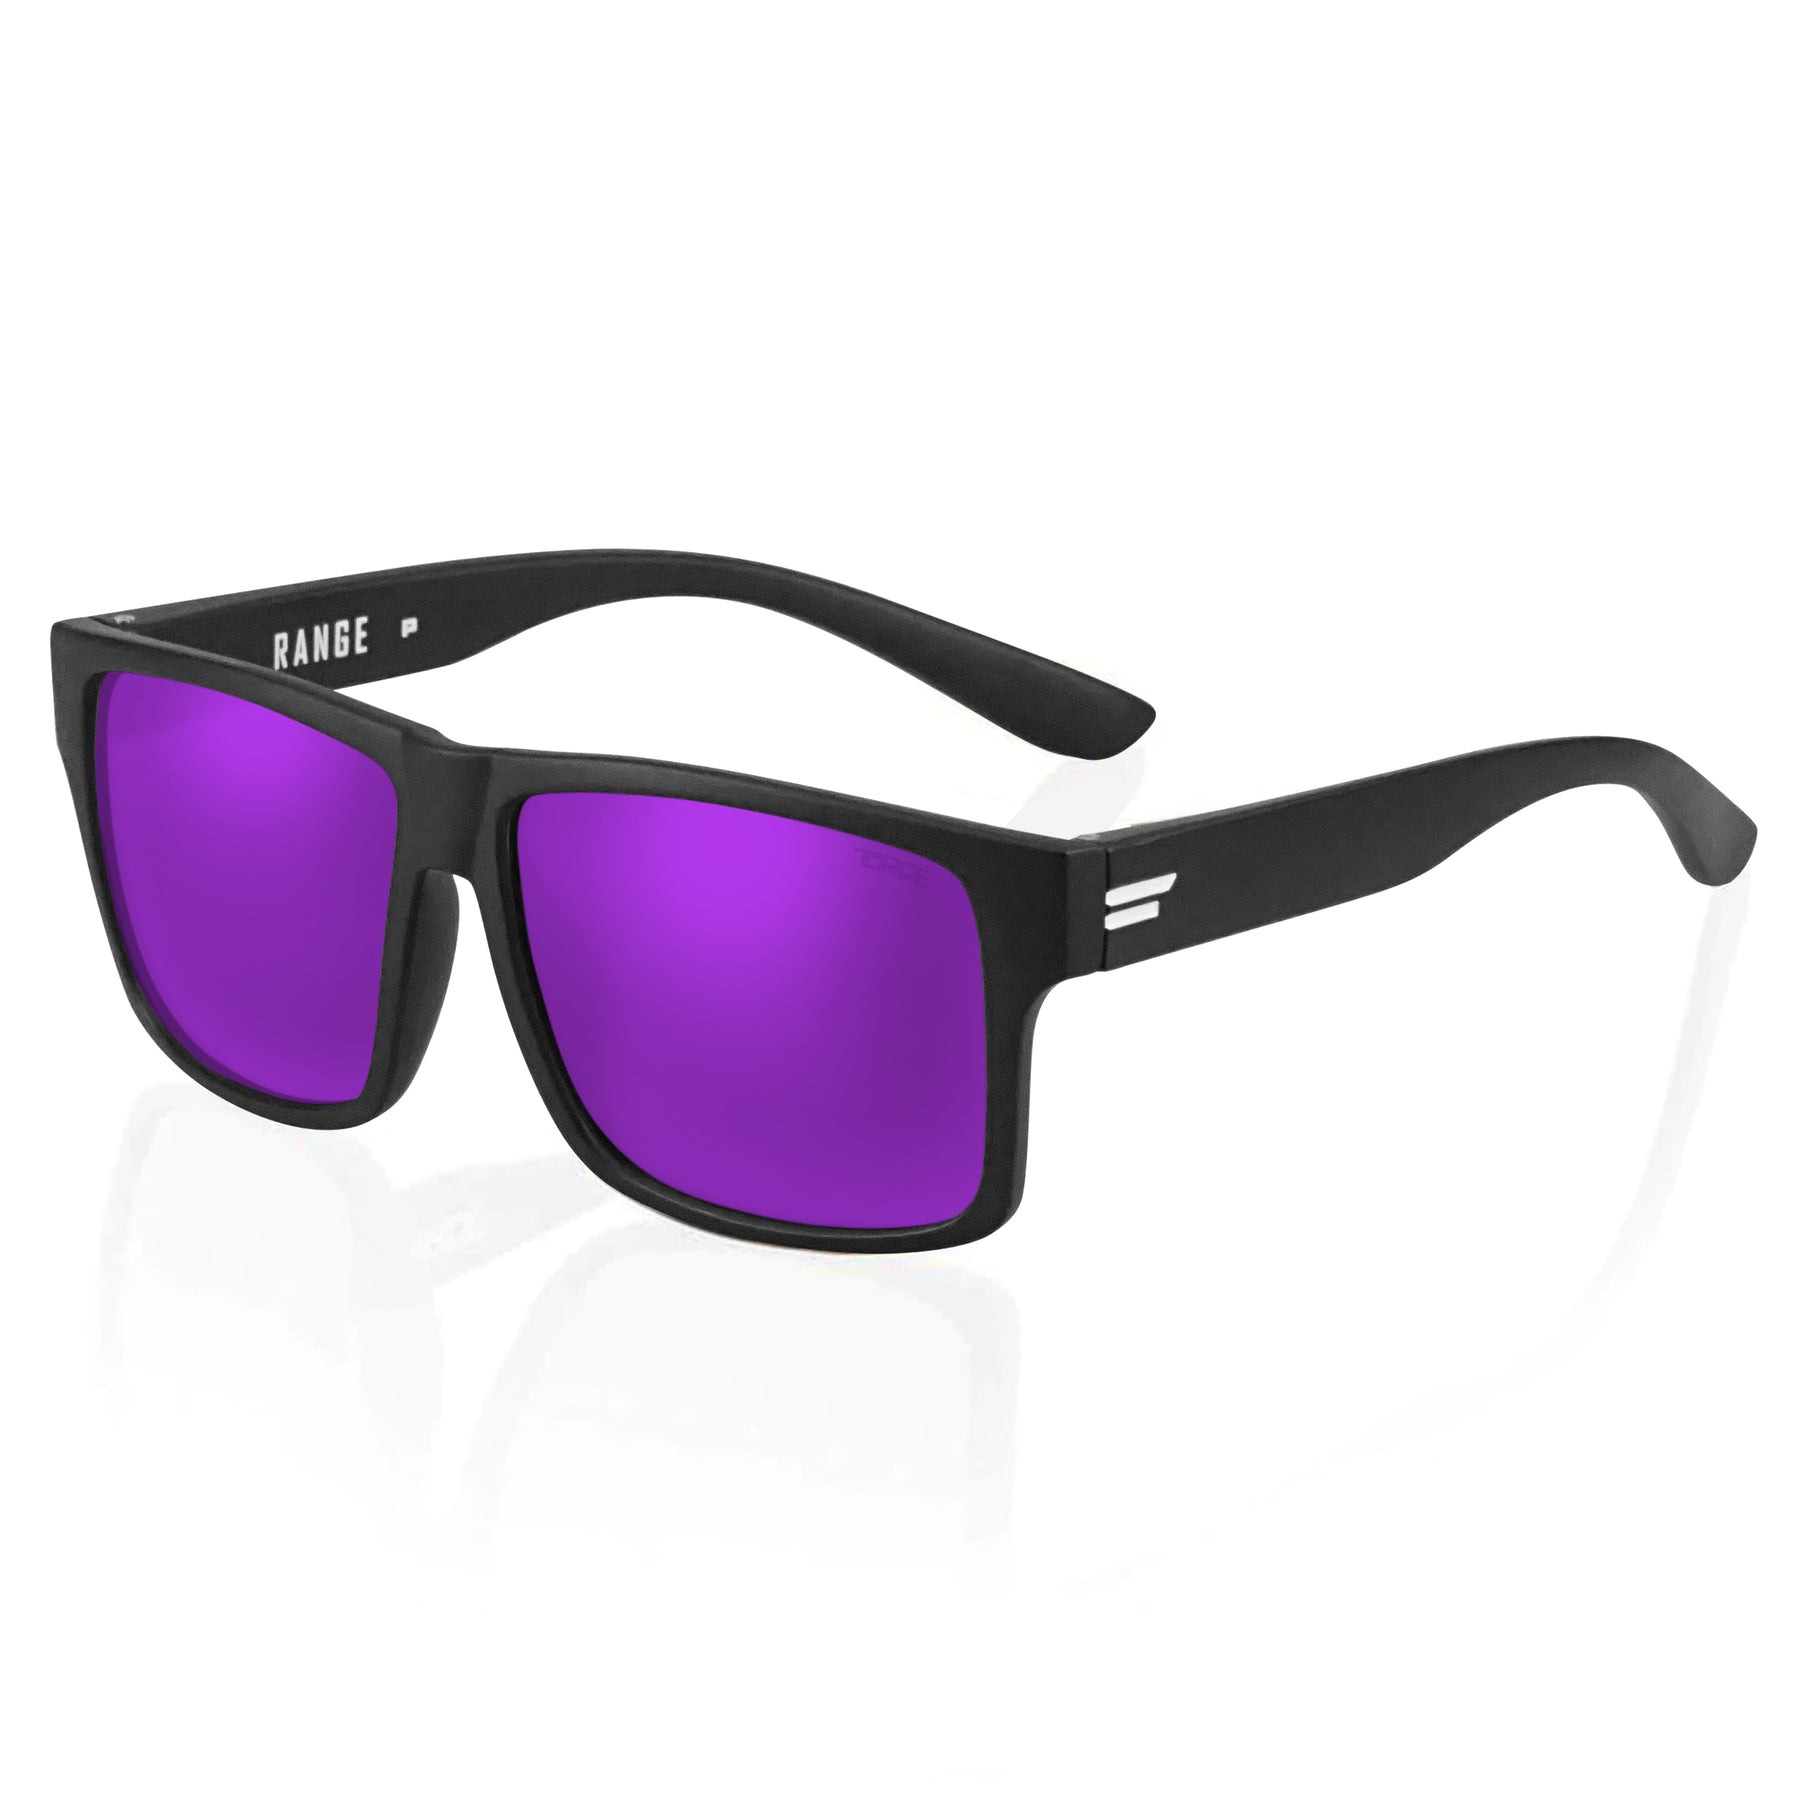 TOROE 'Range' Polarized Sunglasses with Lifetime Warranty – TOROE